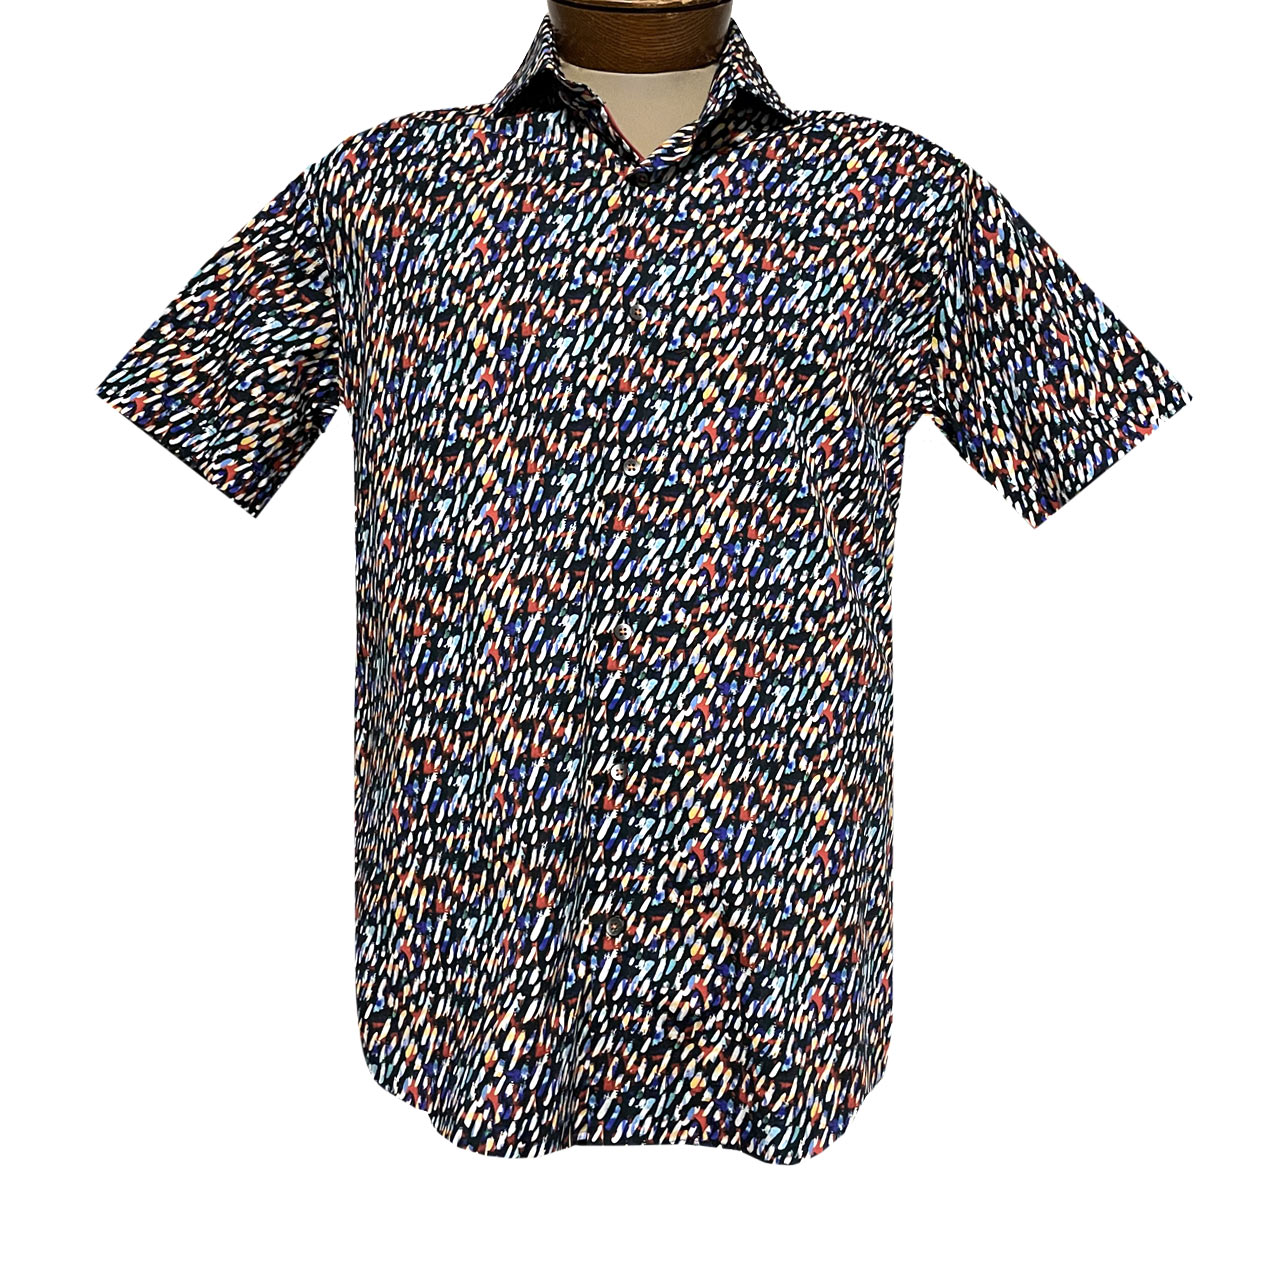 Men’s 7 Downey Street Short Sleeve Digital Print Sport Shirt, Dallas Black Multi